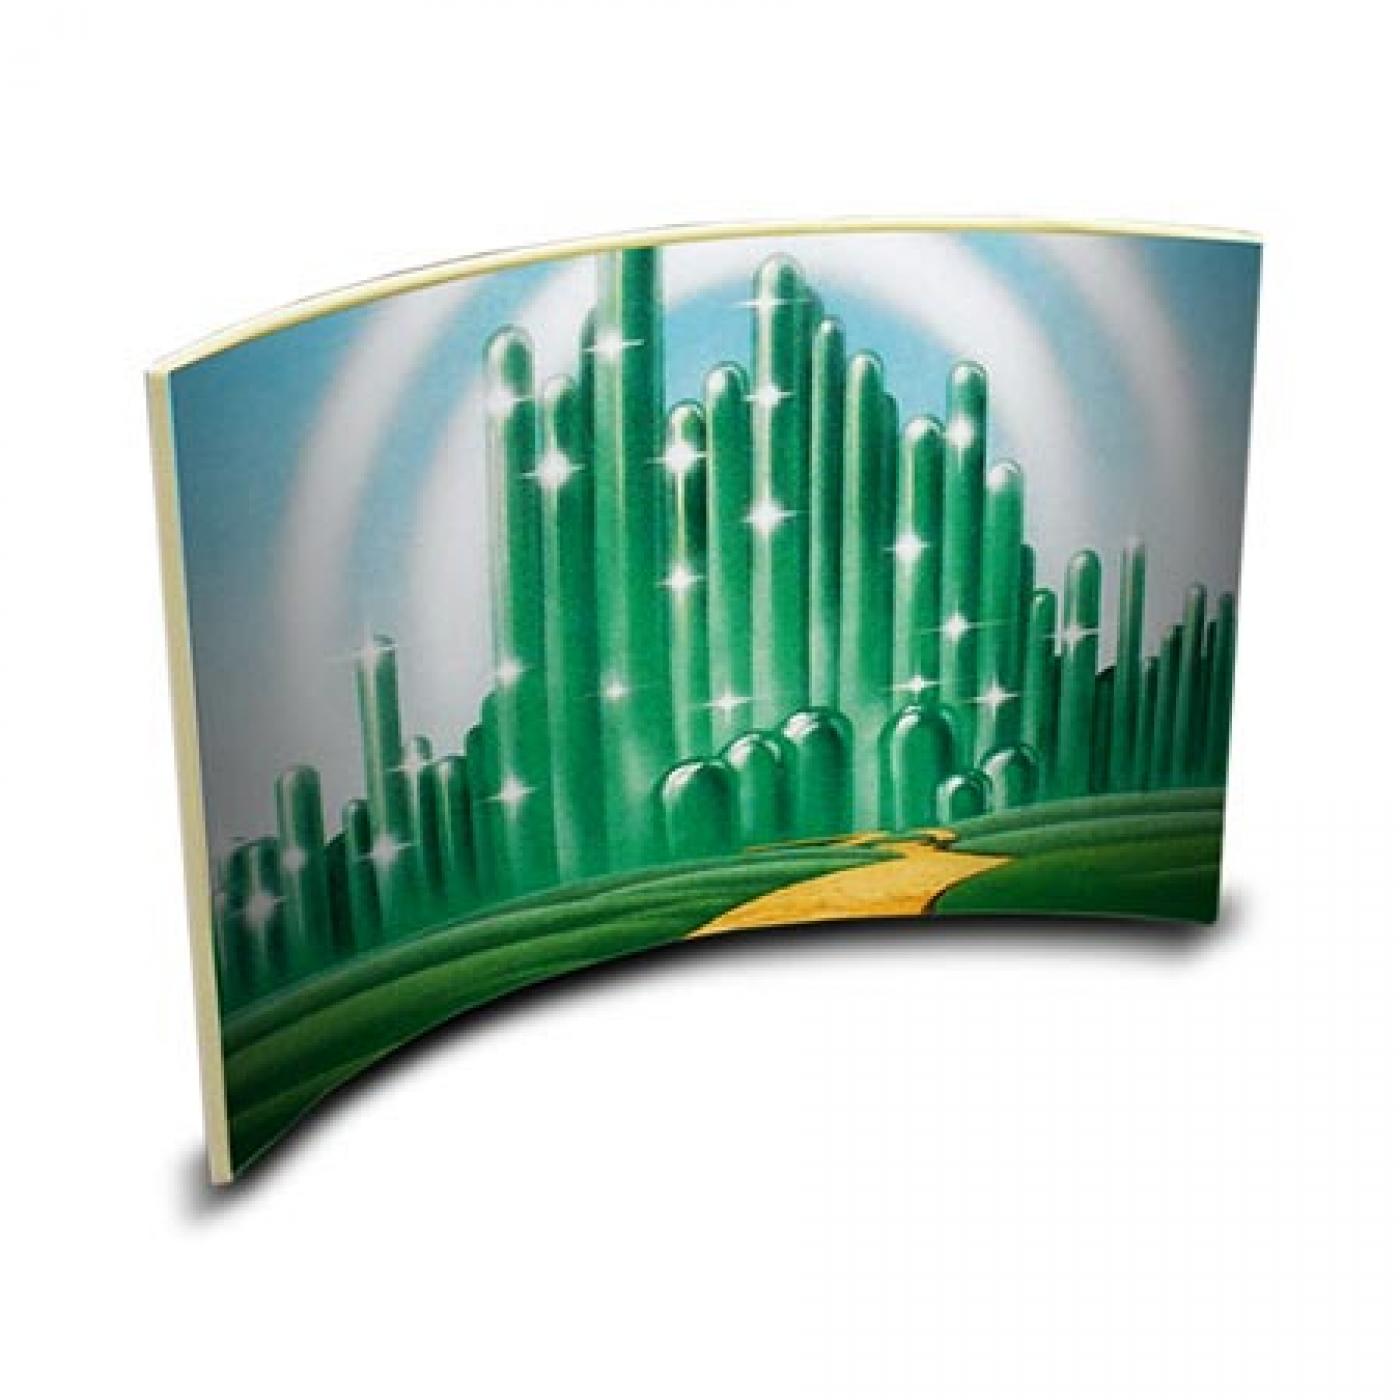 Emerald City, Wizard of Oz Photo Backdrop